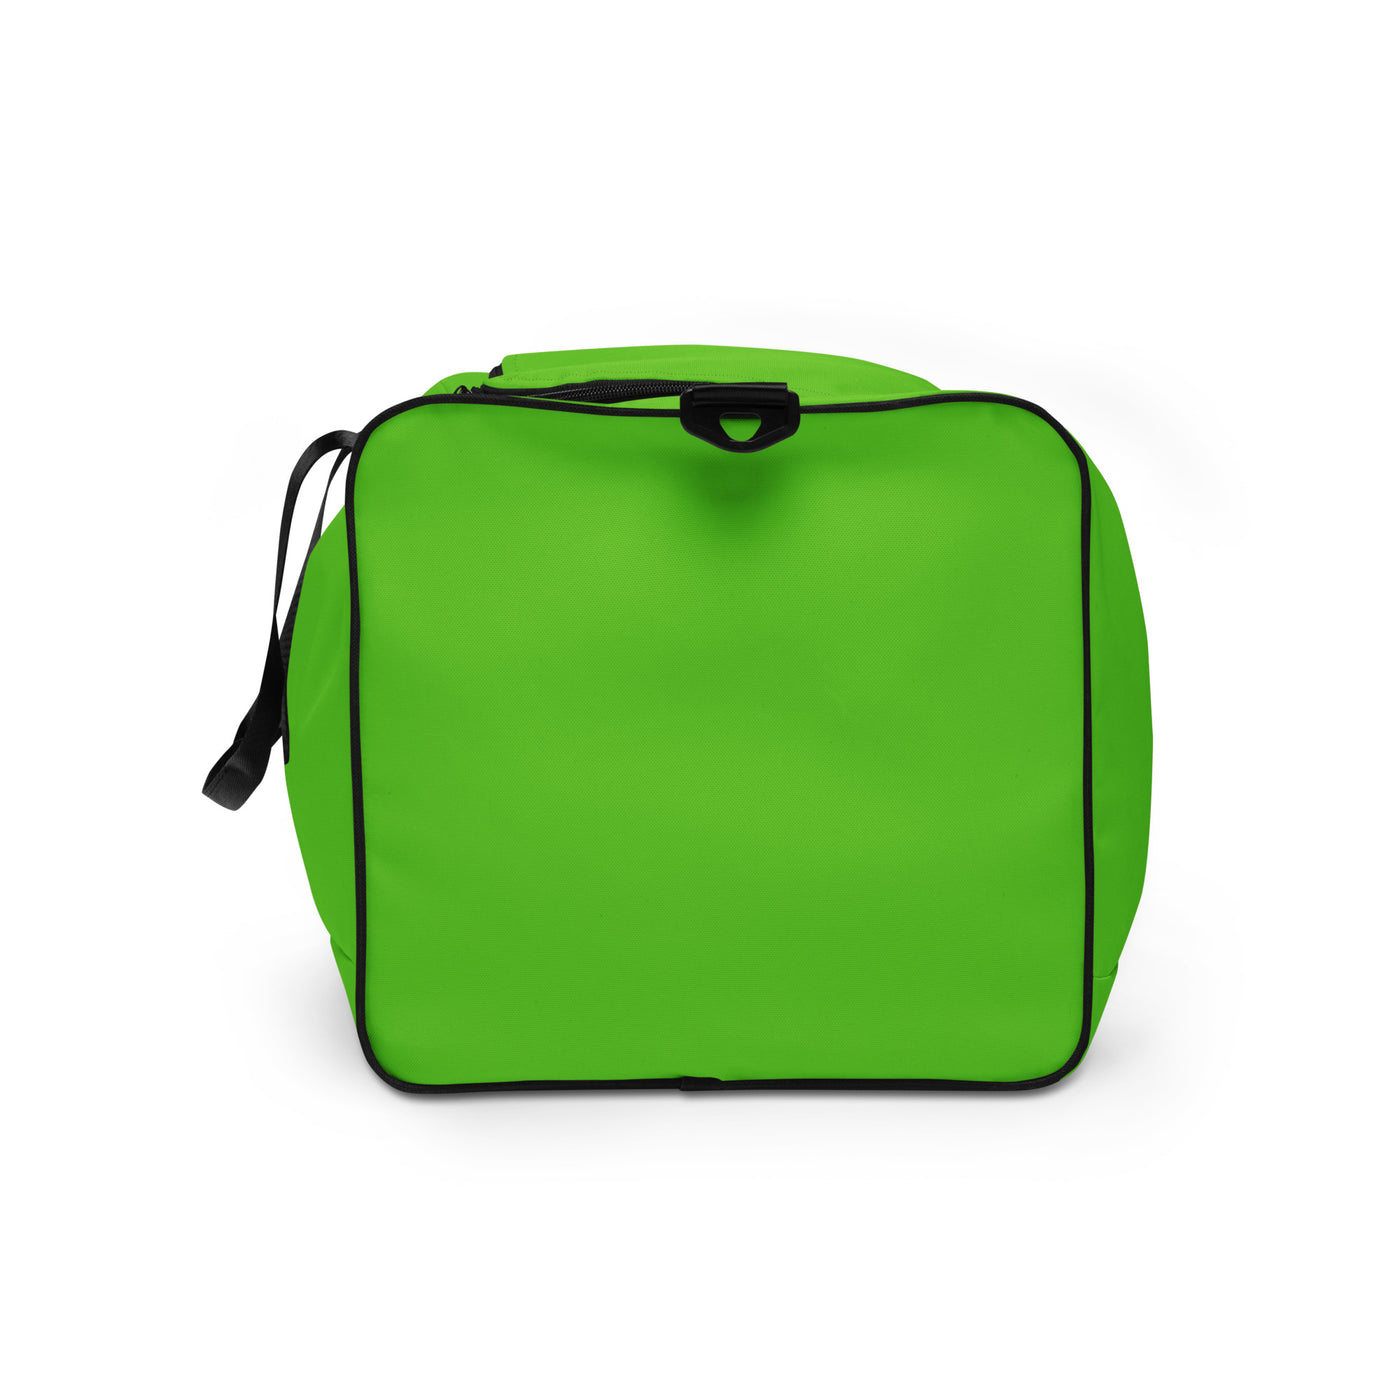 EFC Lime Duffle bag